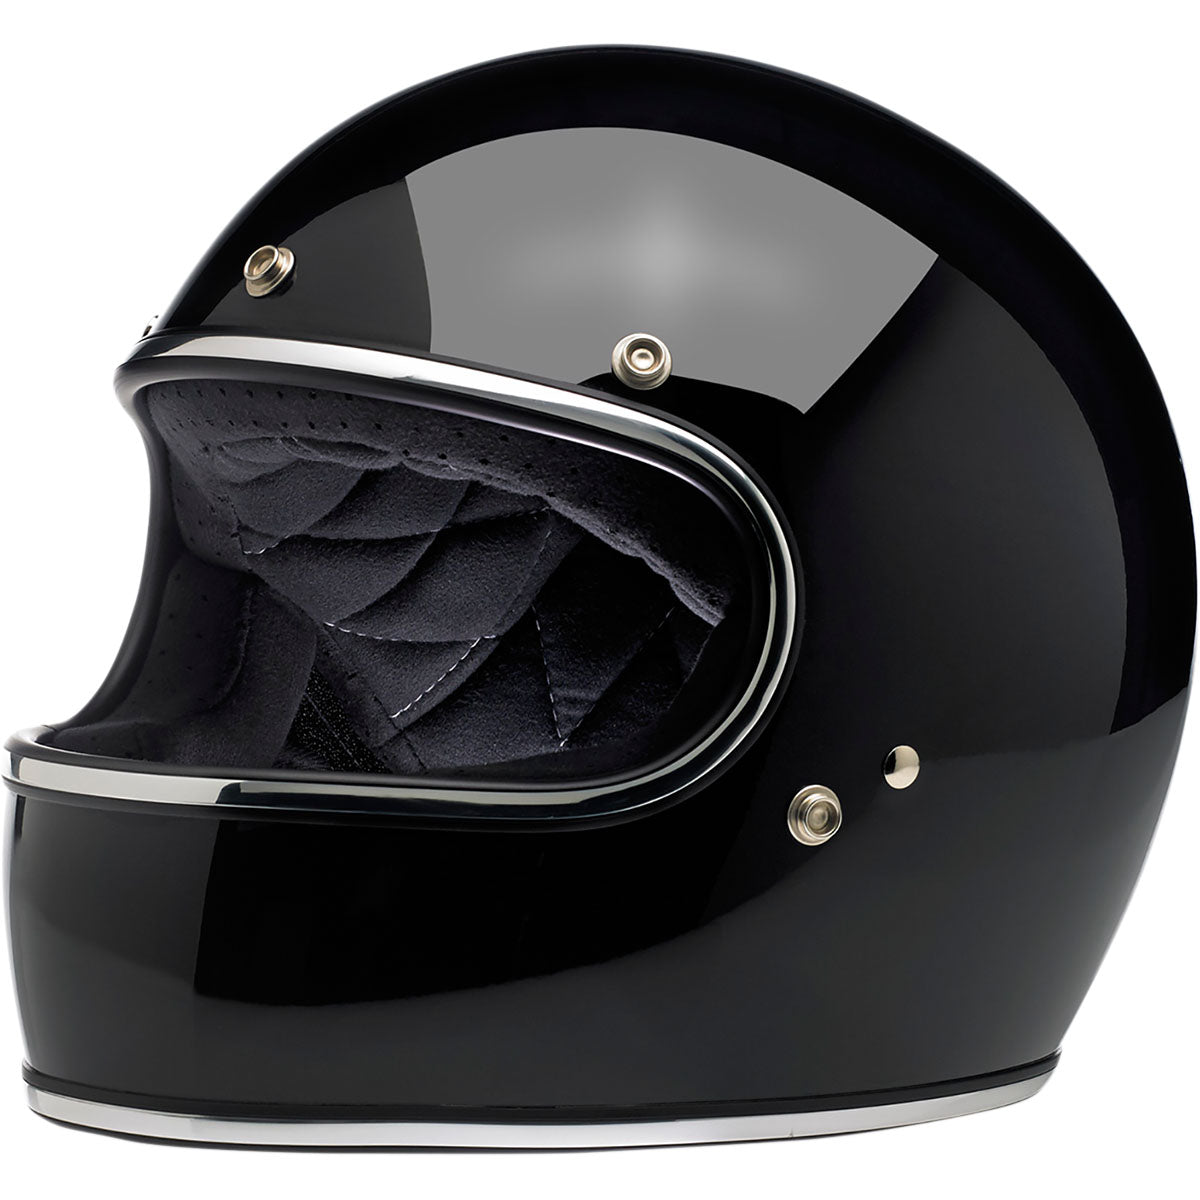 Biltwell Gringo Helmet CLOSEOUT - Gloss Black